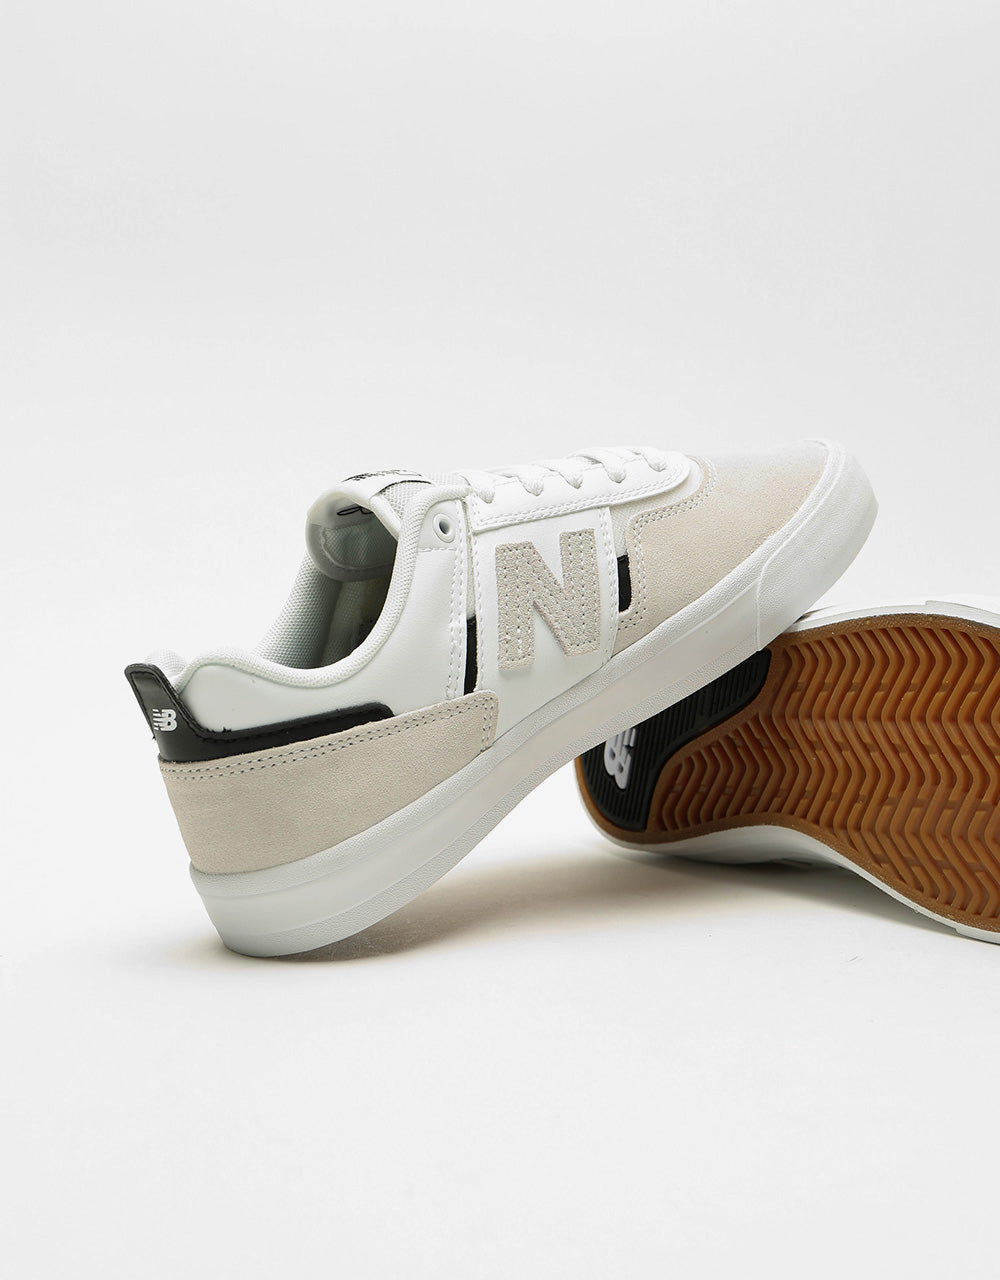 New Balance Numeric 306 Skate Shoes - White/Black/White